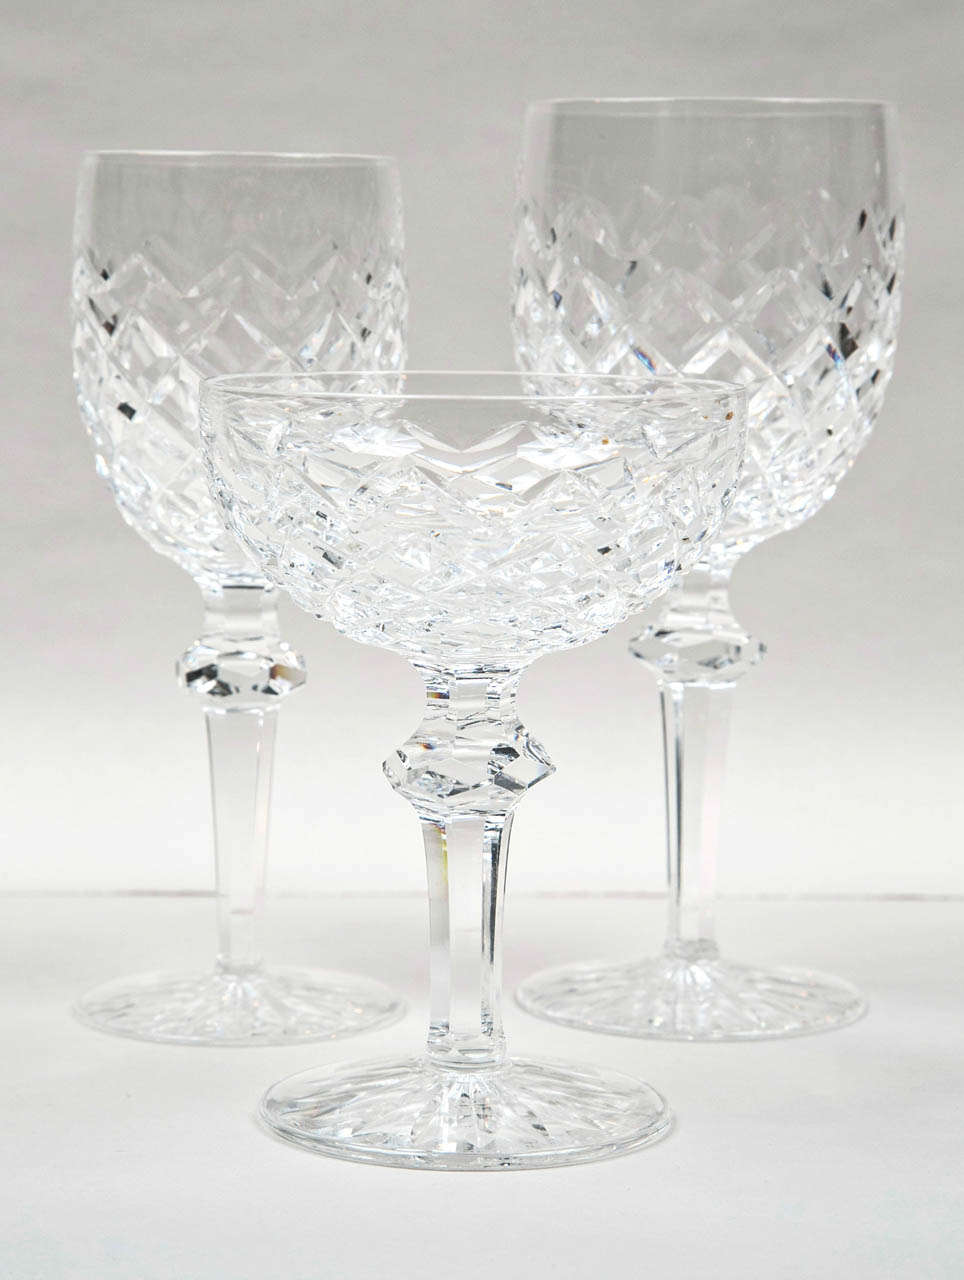 34 Piece Waterford Powerscourt Pattern Vintage Stems
11 Water Goblets
11 Wine Glasses
12 Sherberts